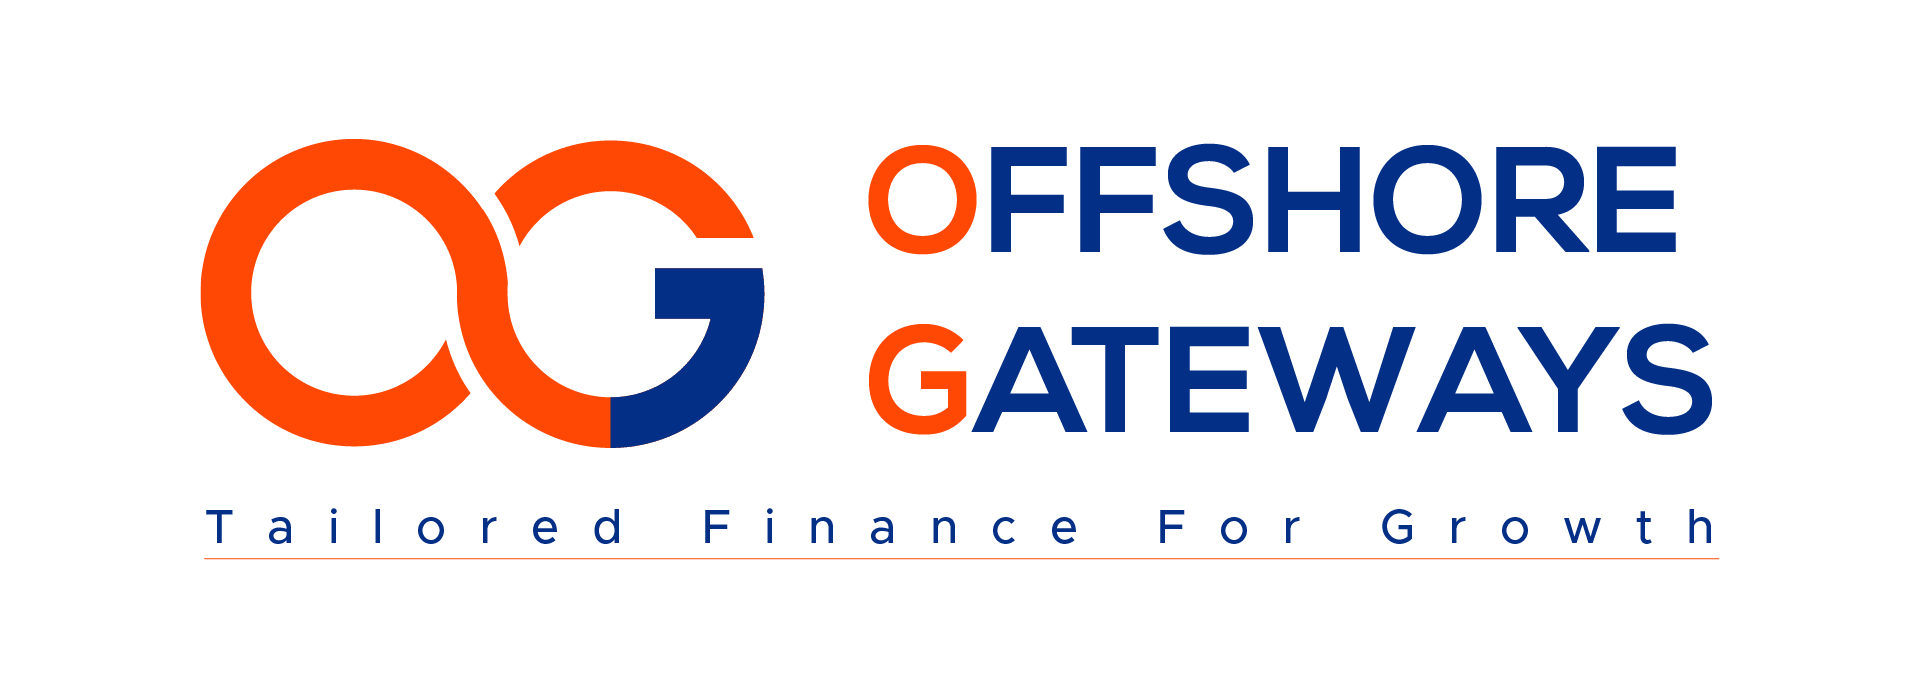 Merchant Bank Account - Offshore Gateways